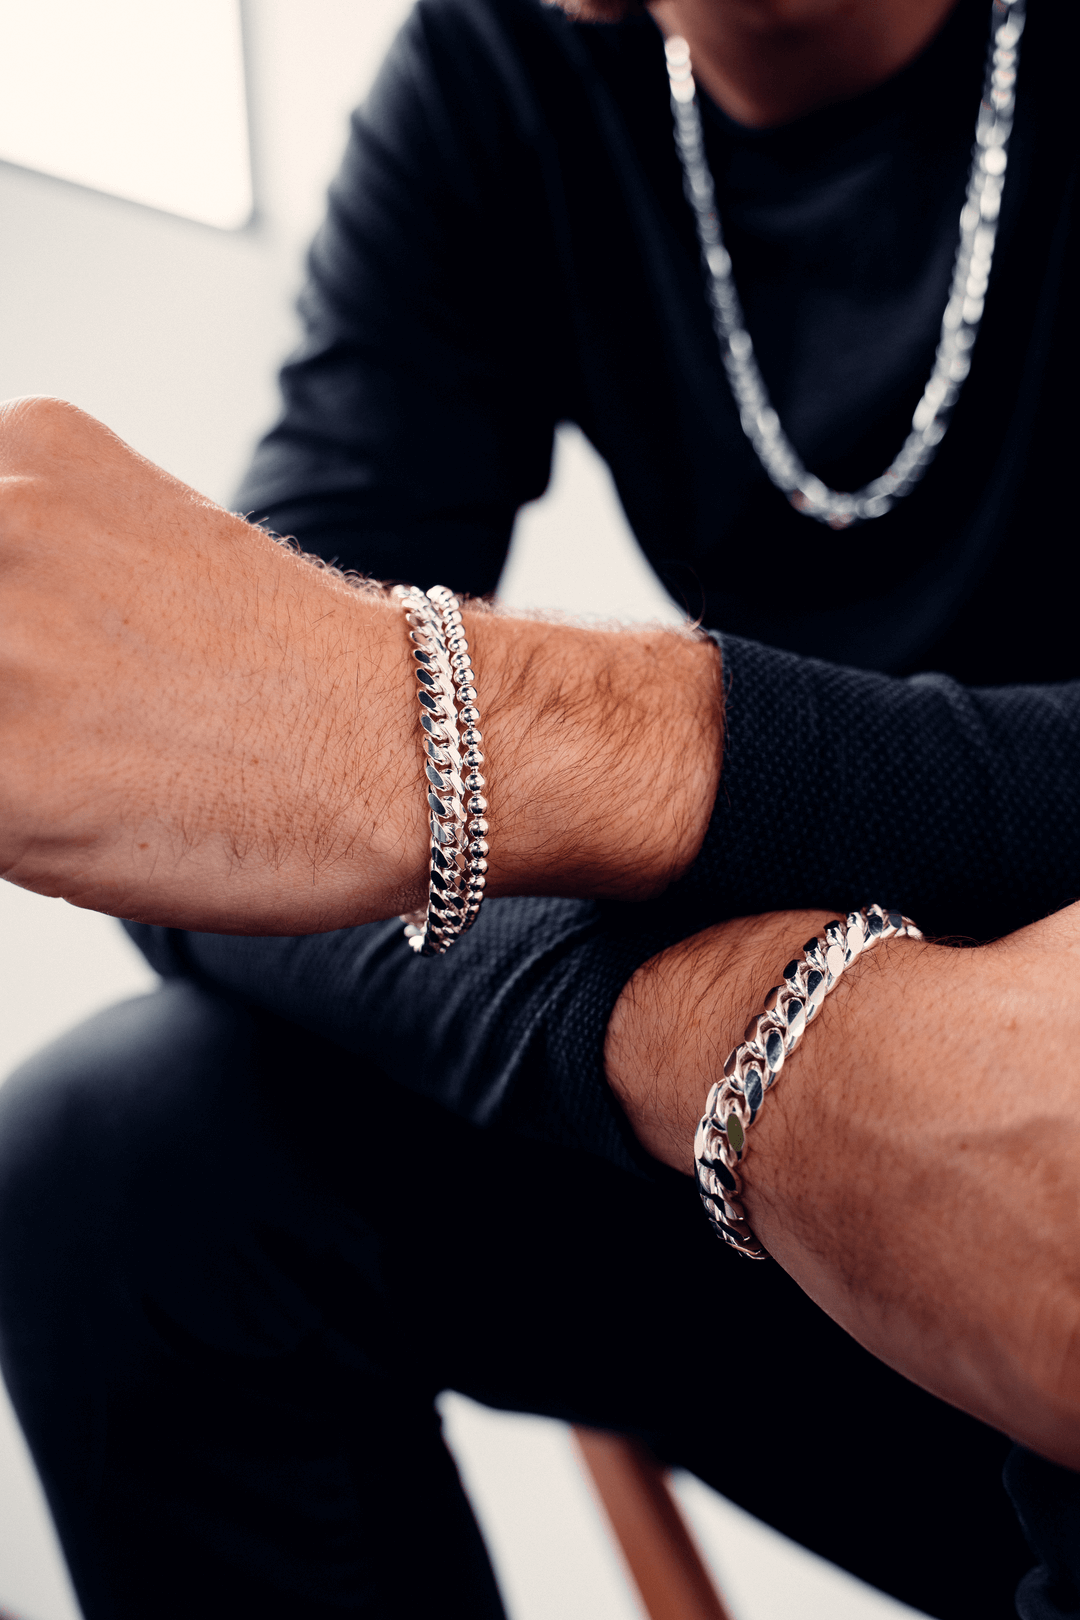 Buy Bracelet online in Pune for best prices.